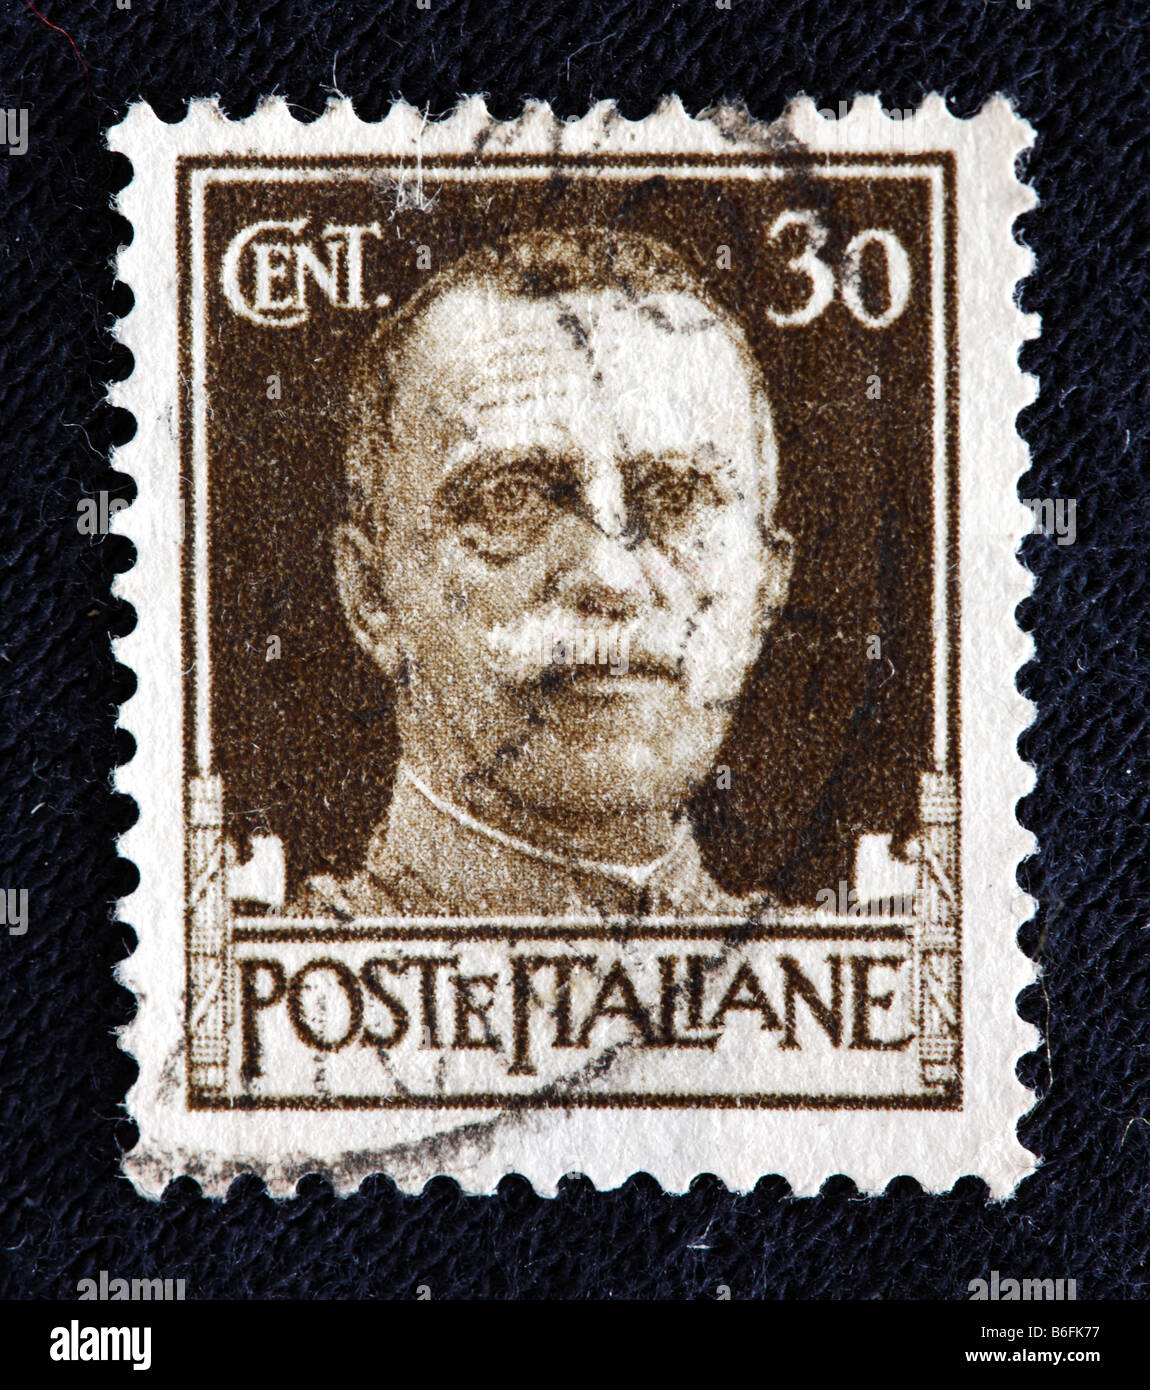 Victor Emmanuel III, roi d'Italie (1900-1946), timbre-poste, Italie Banque D'Images